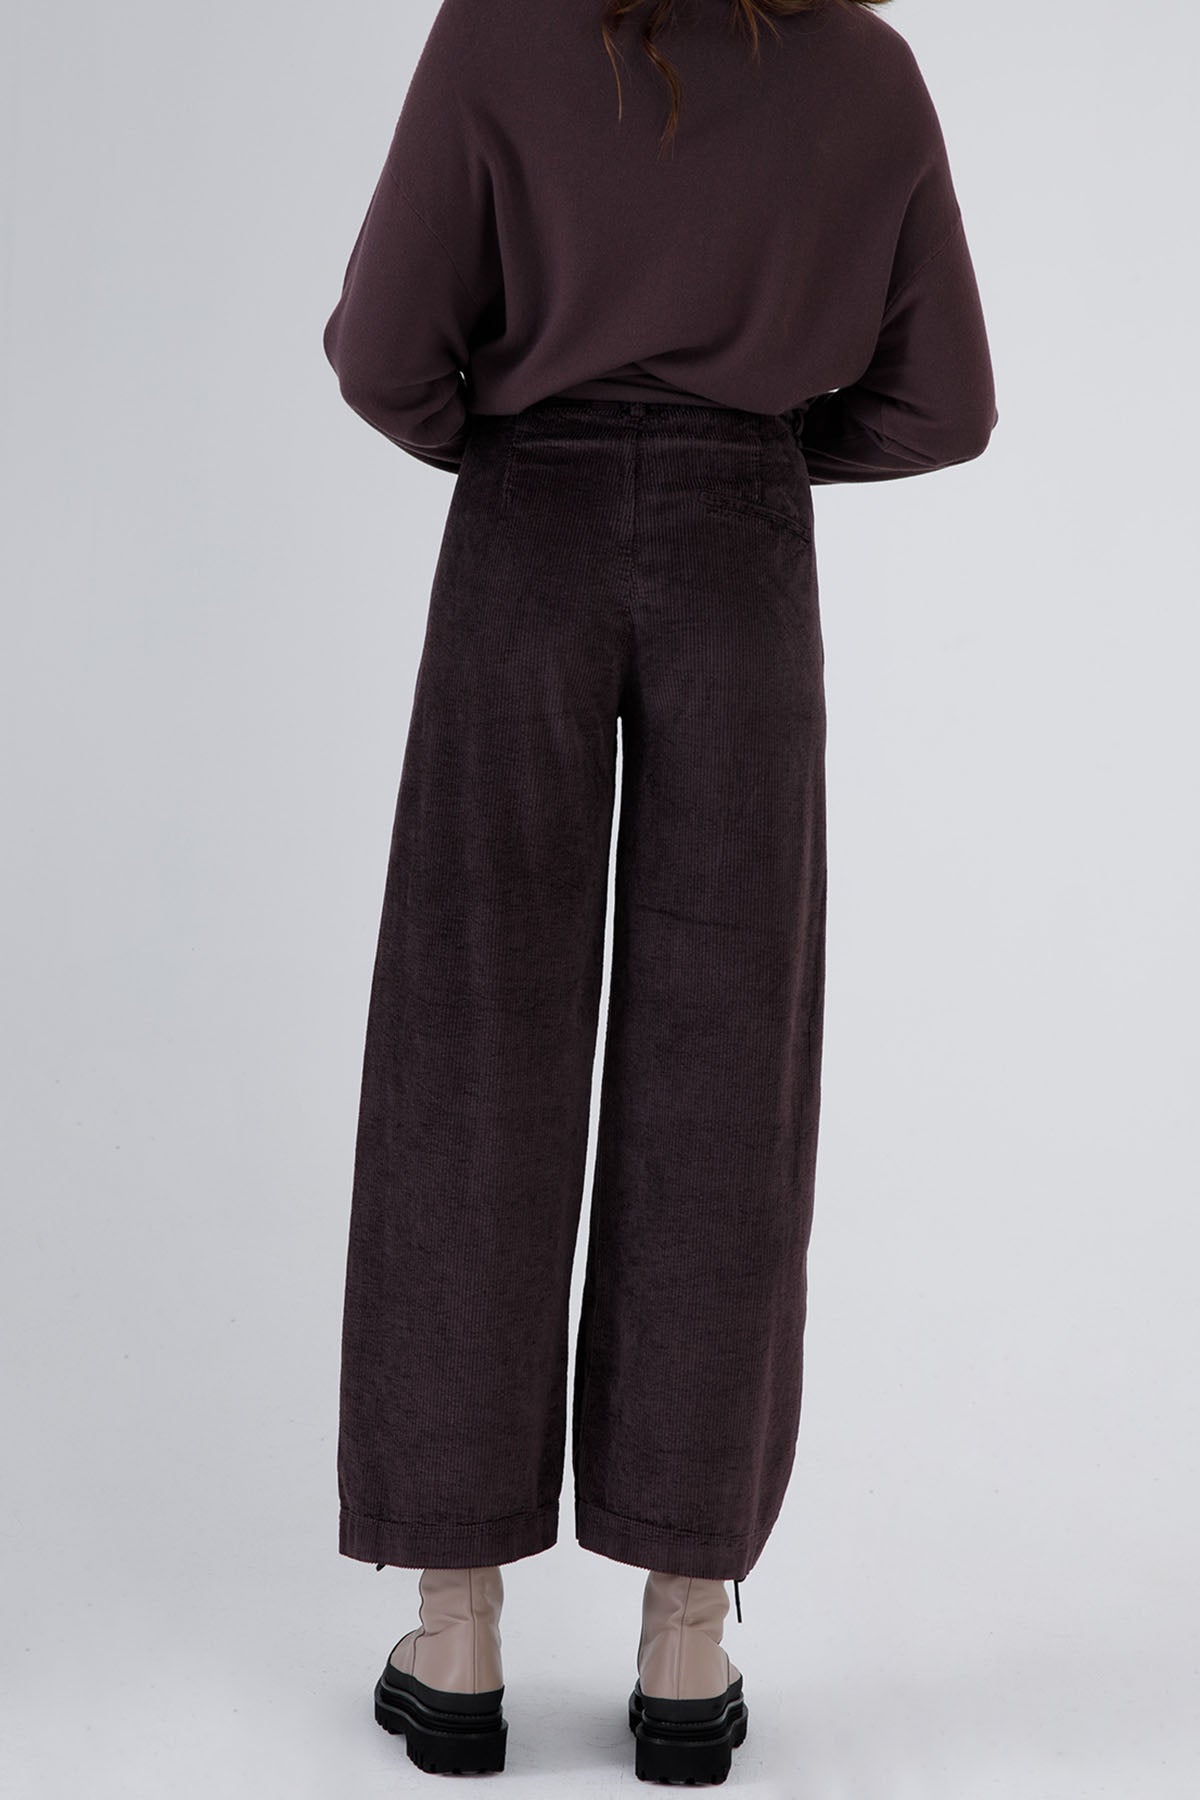 Transit Fitilli Kadife Yüksek Bel Streç Pantolon-Libas Trendy Fashion Store